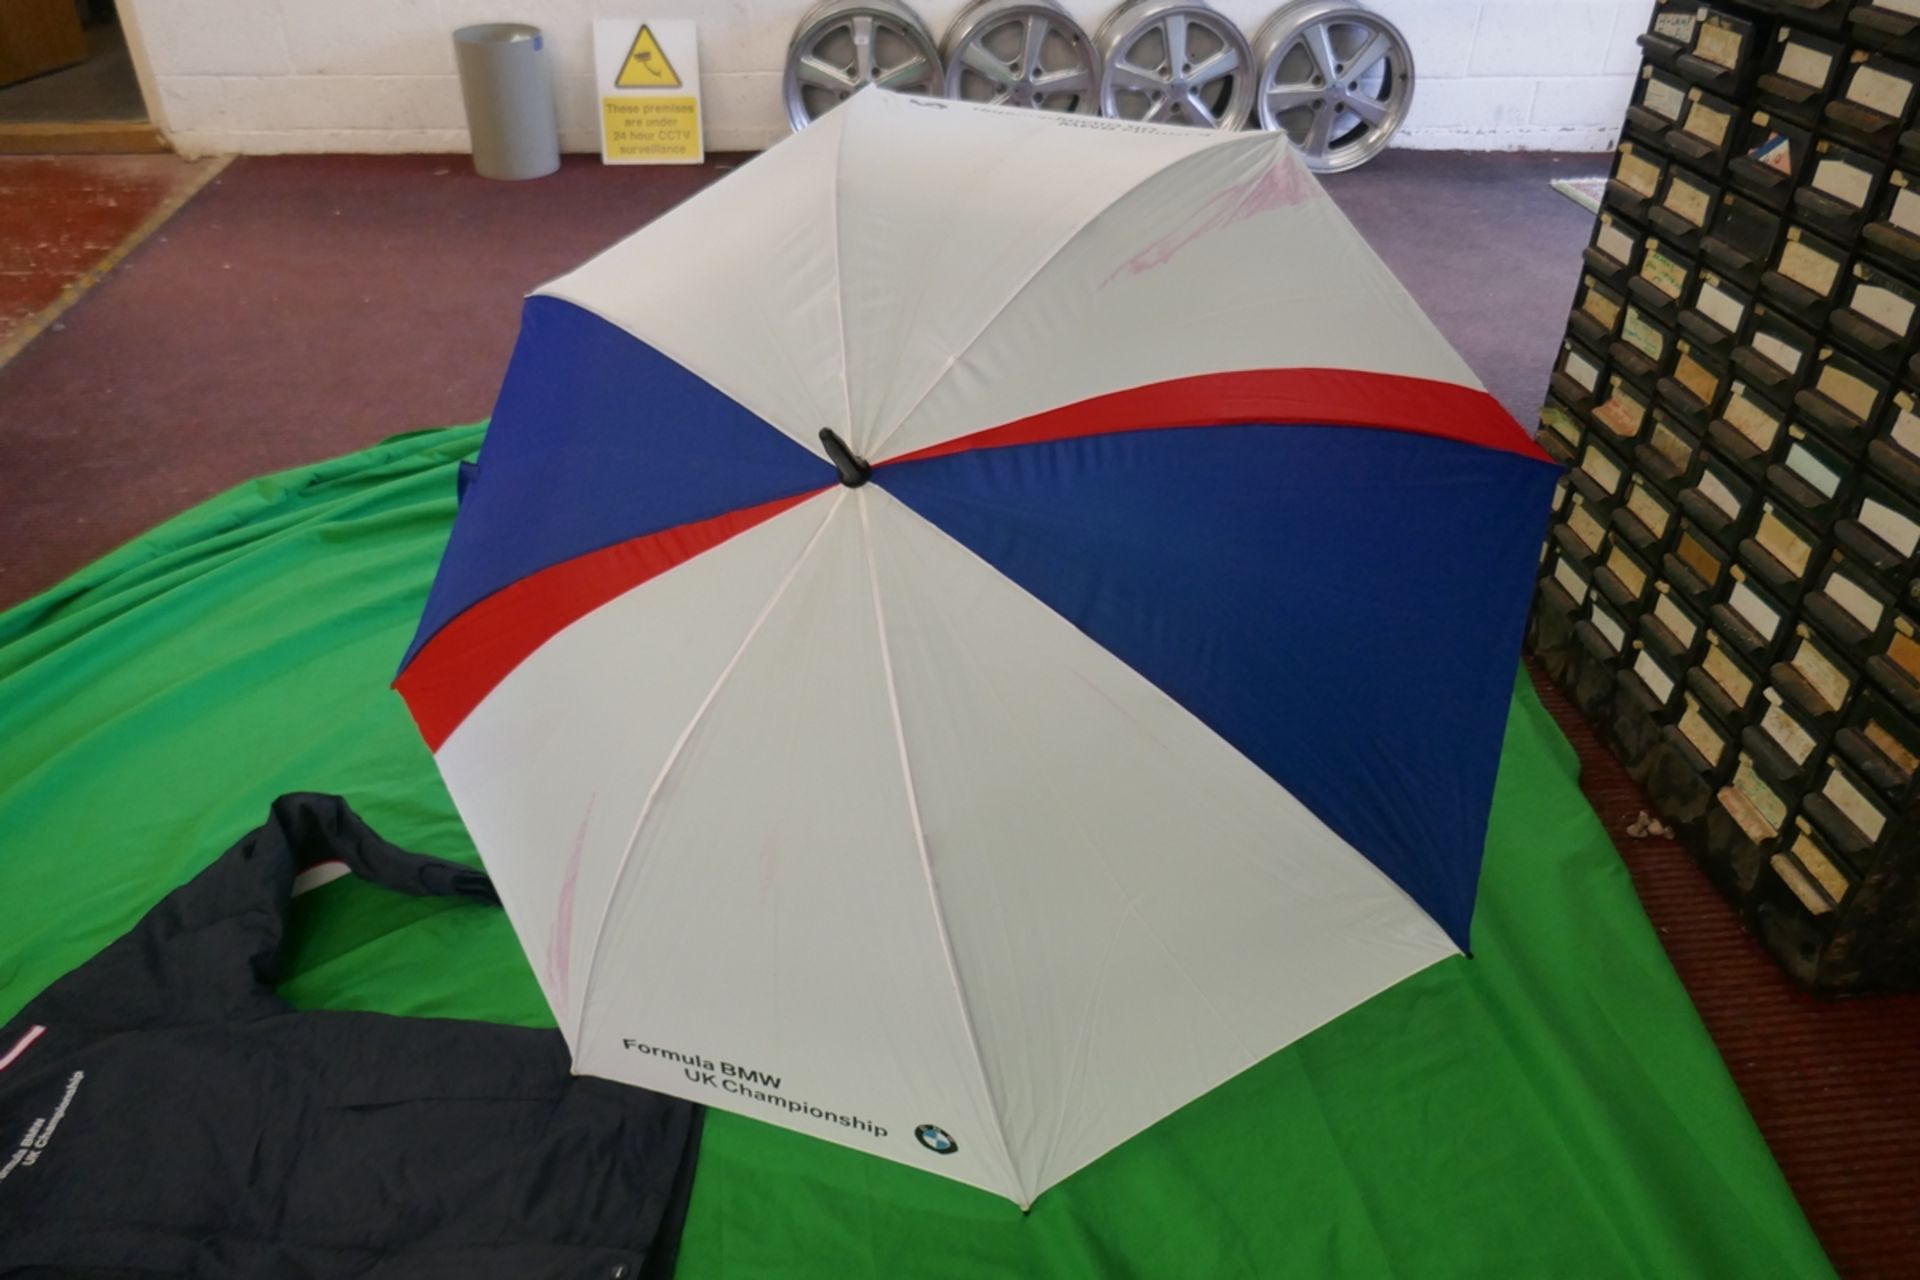 2 Formula BMW UK Championship jackets together with a BMW umbrella - Bild 6 aus 7